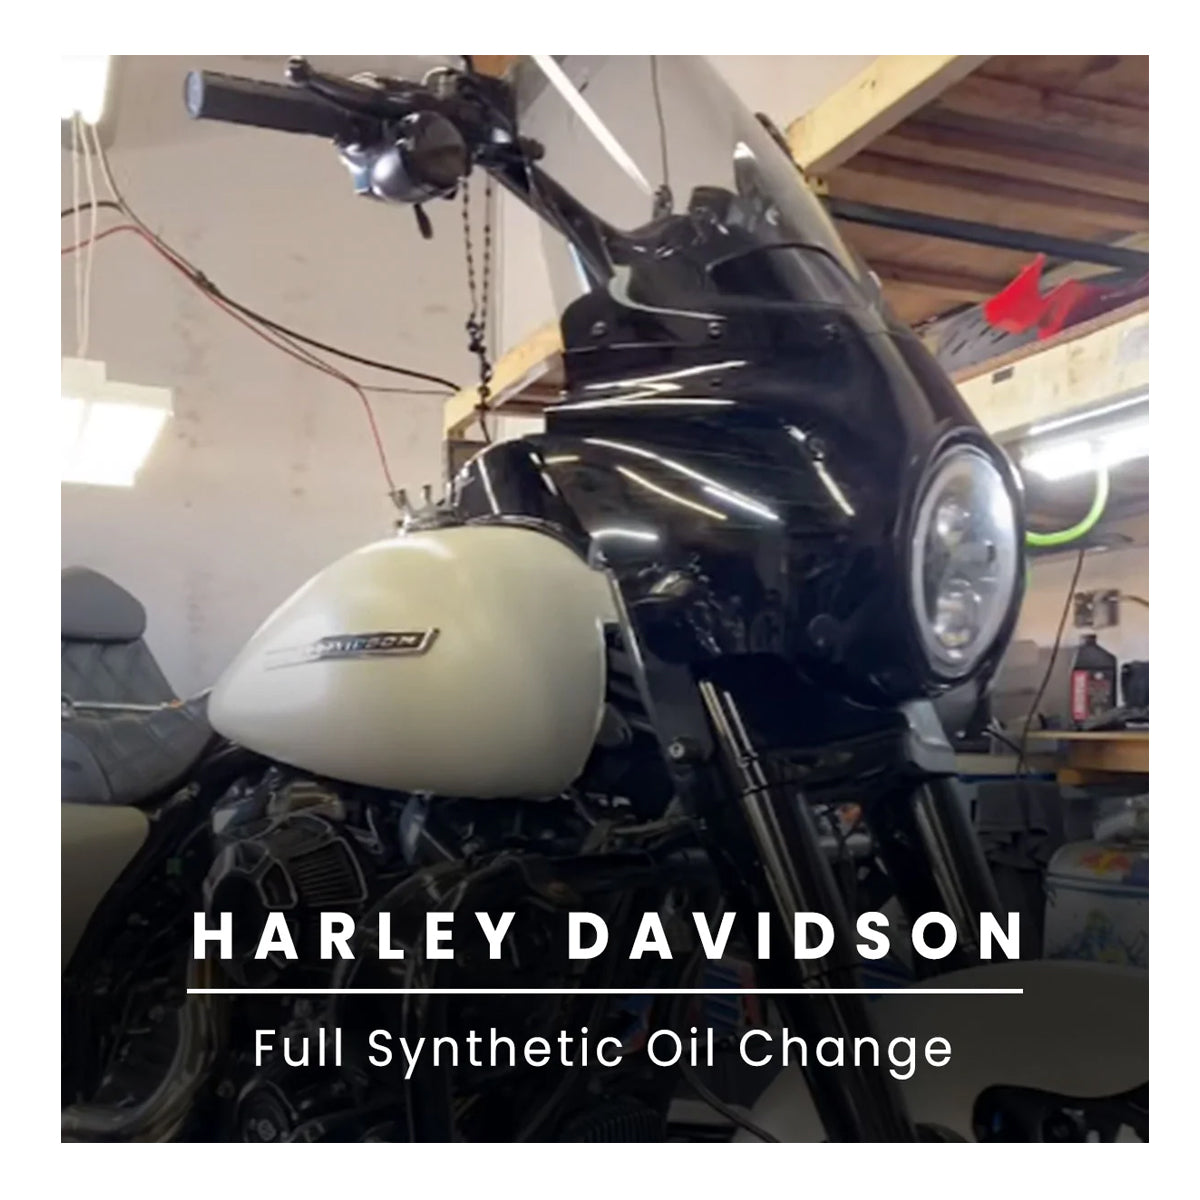 Harley Davidson Full Synthetic Oil Change Service